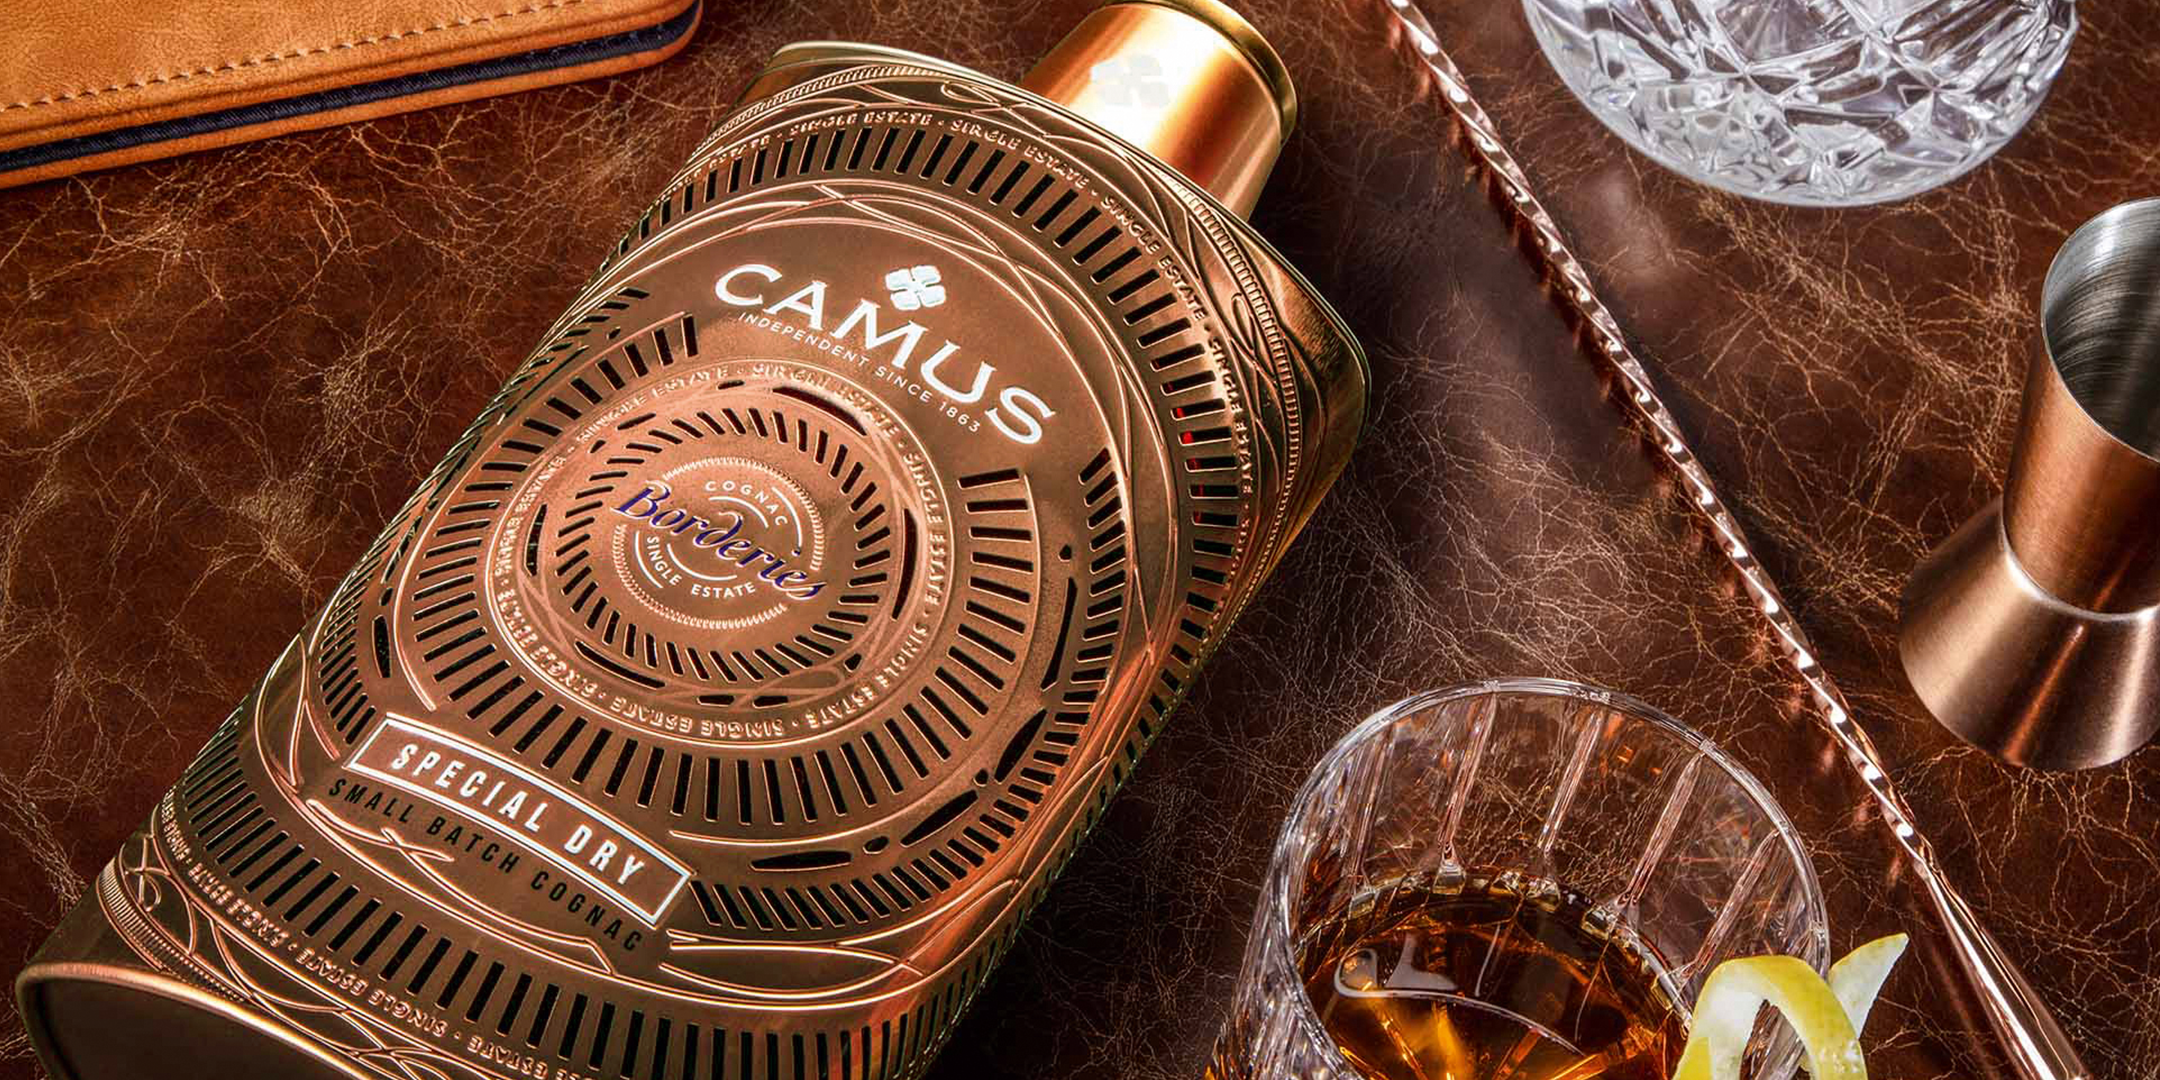 cognac camus borderies special dry 